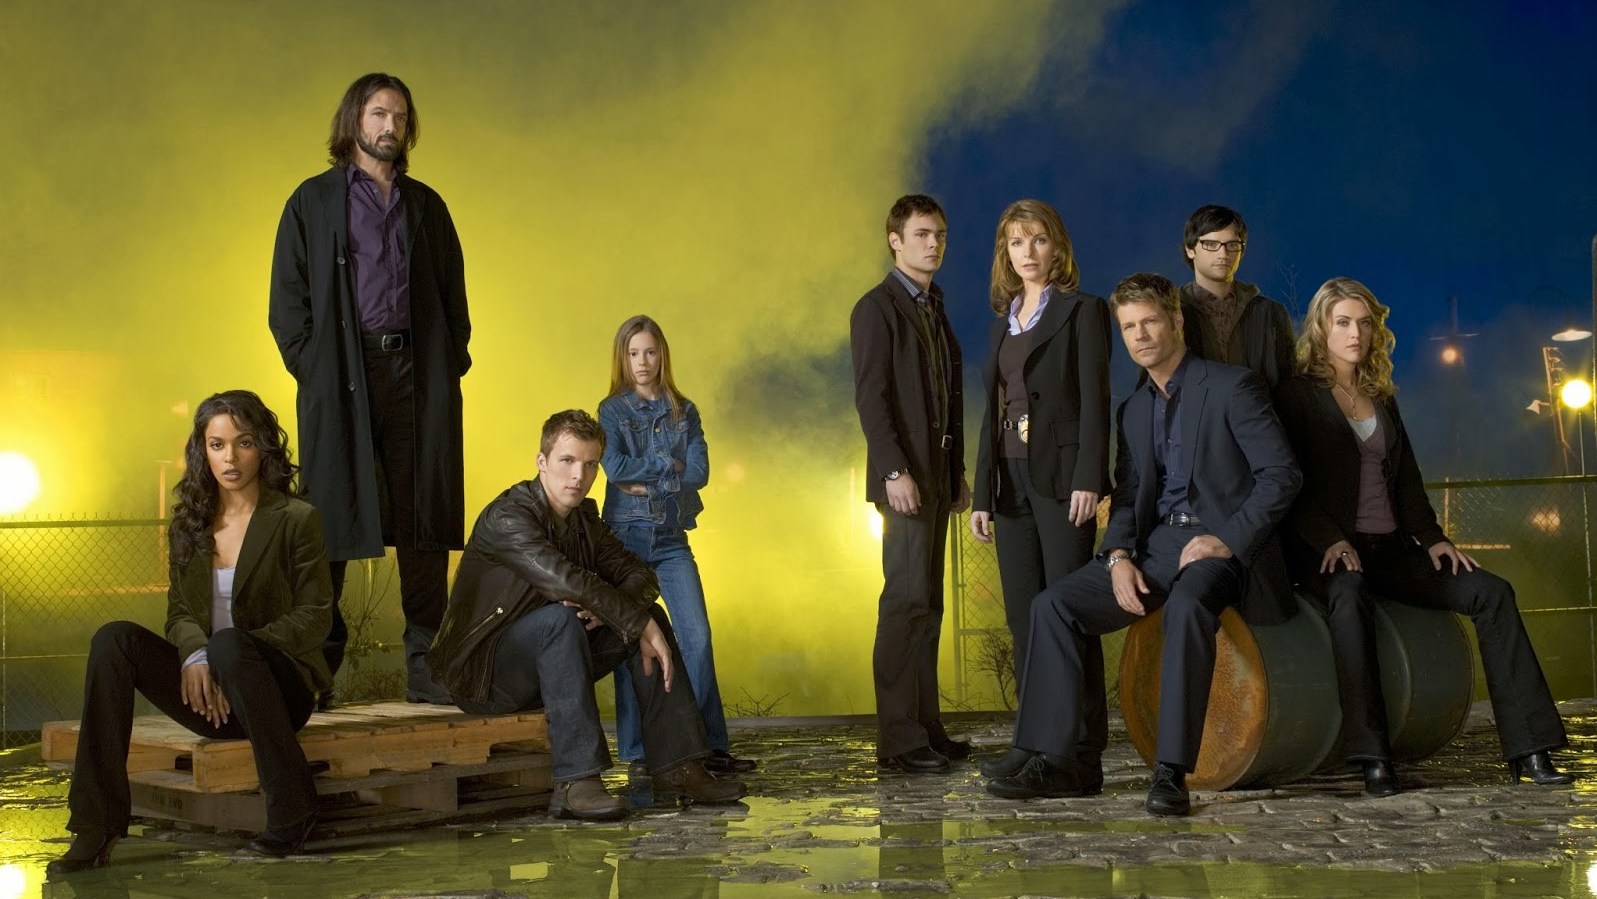 The cast of The 4400's final season. (Photo: USA)